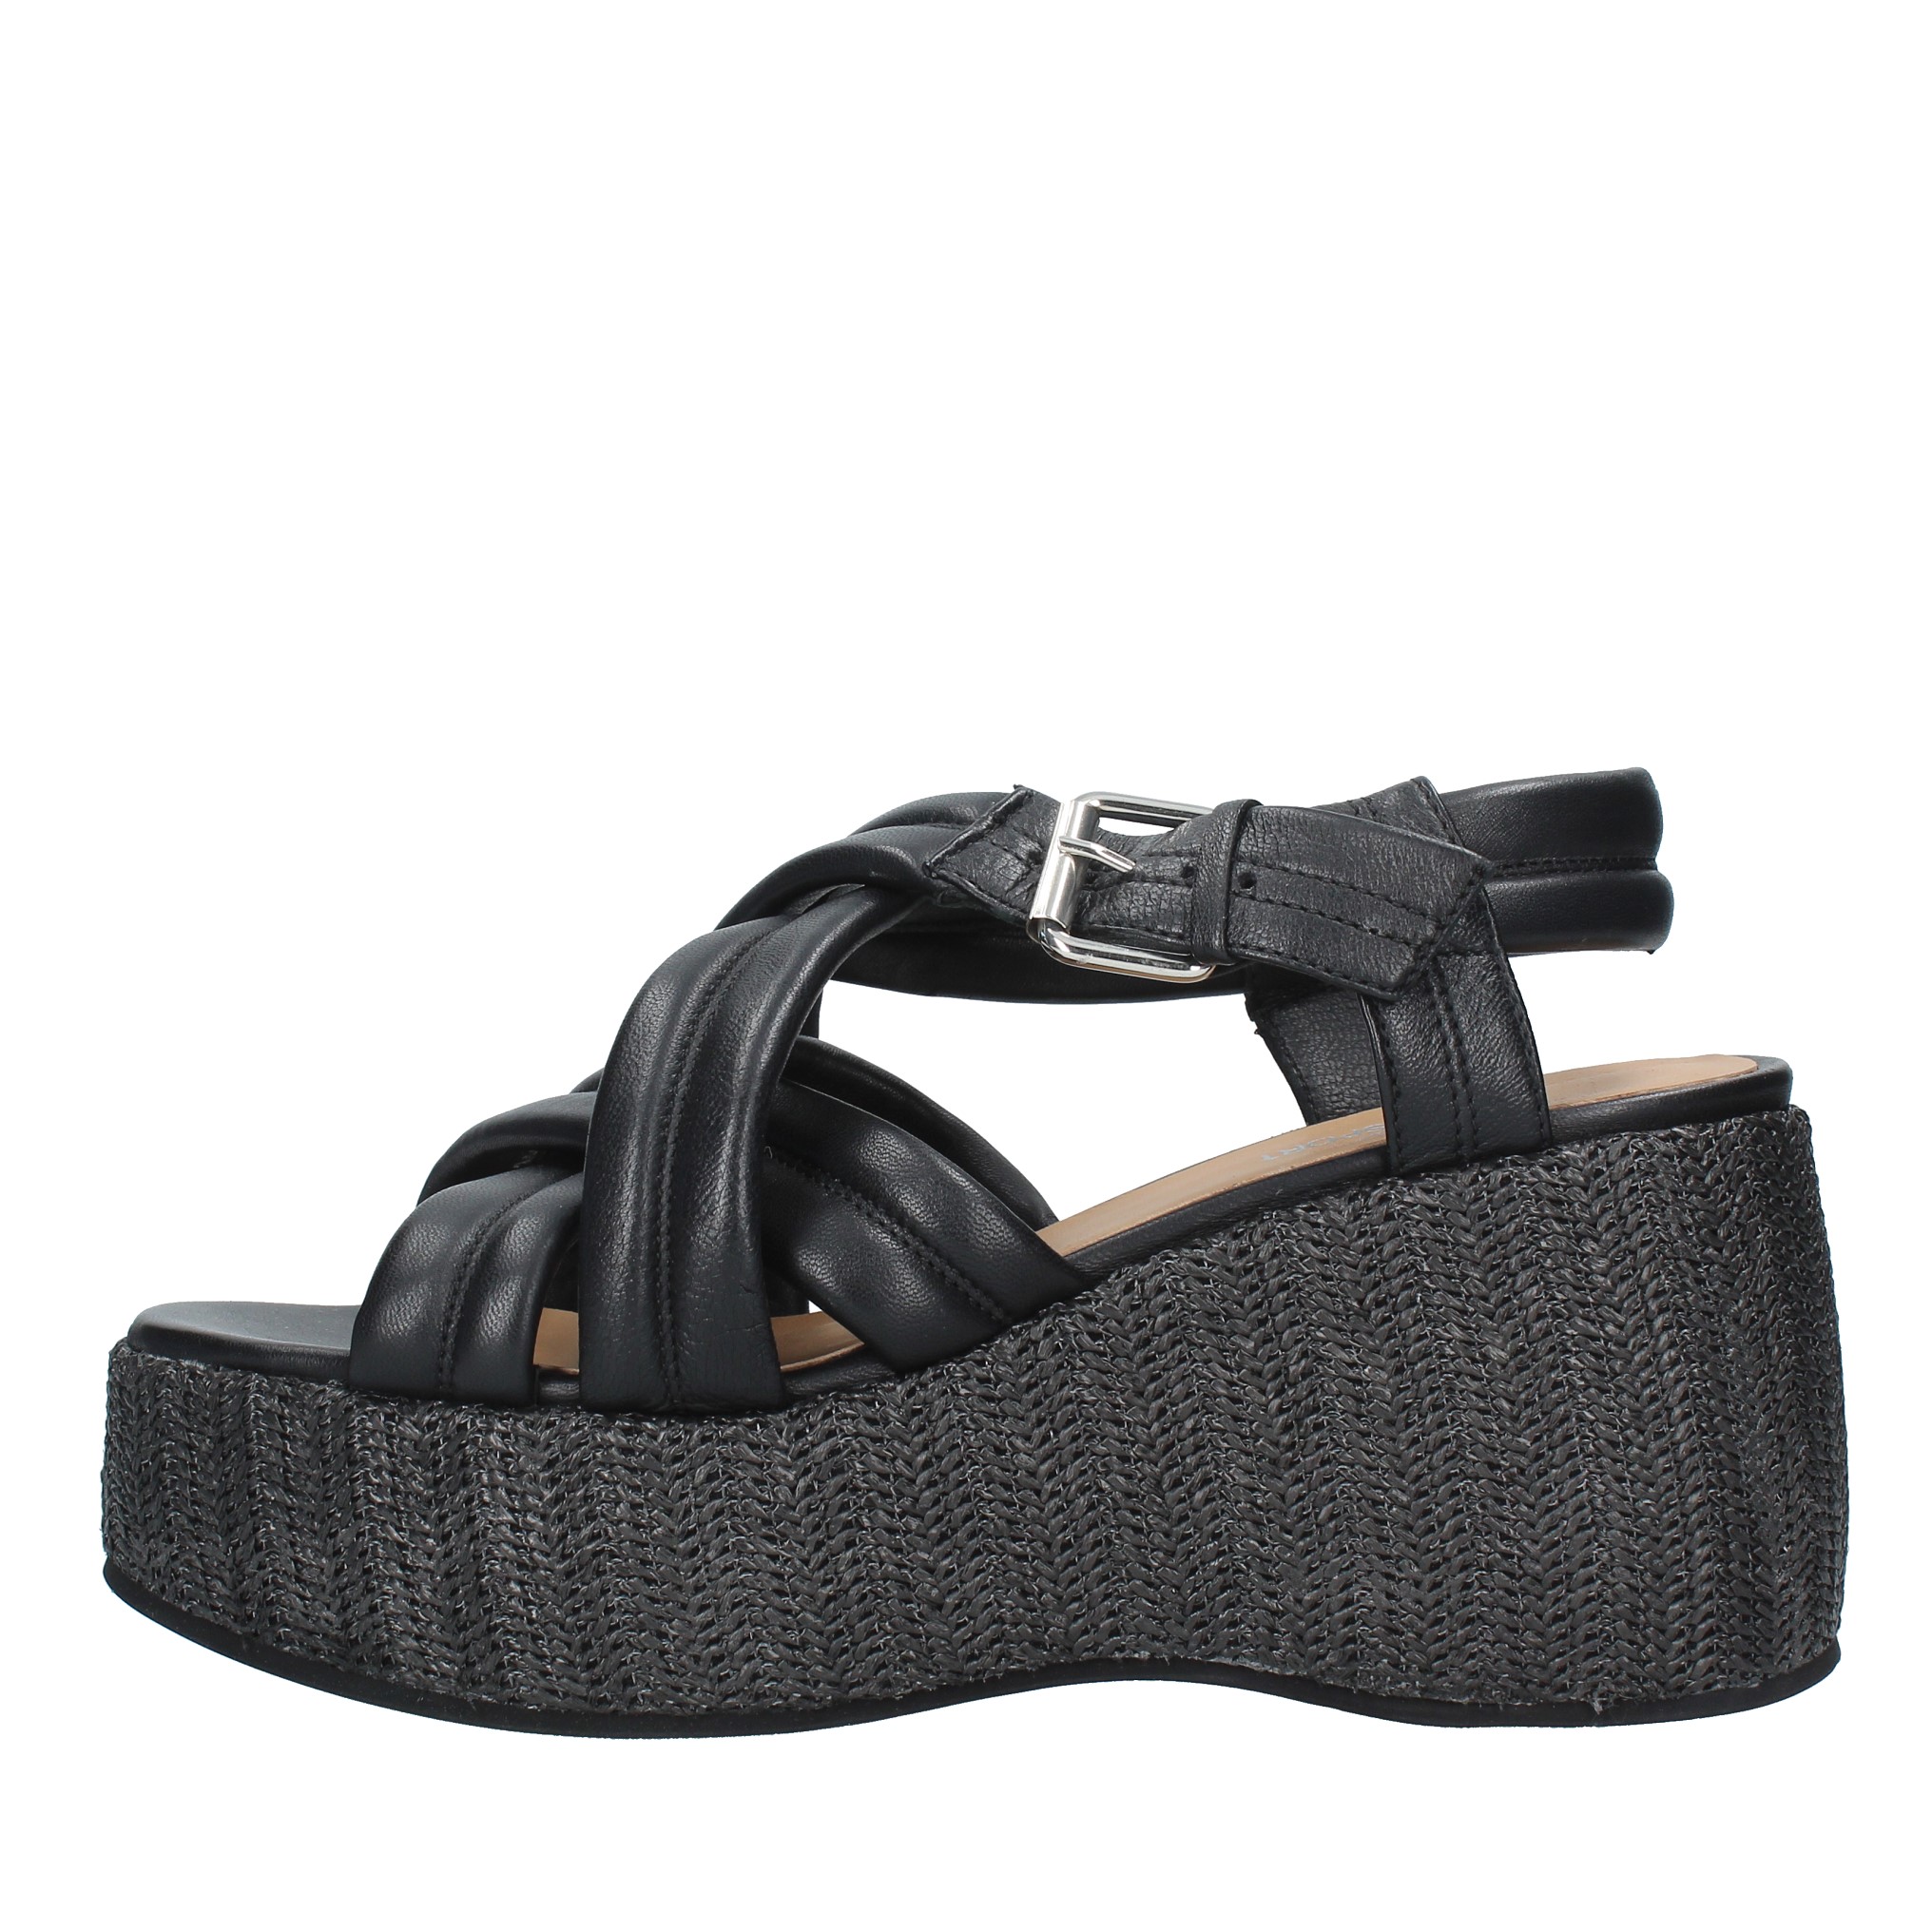 Sandals Black - JANET SPORT - Ginevra calzature